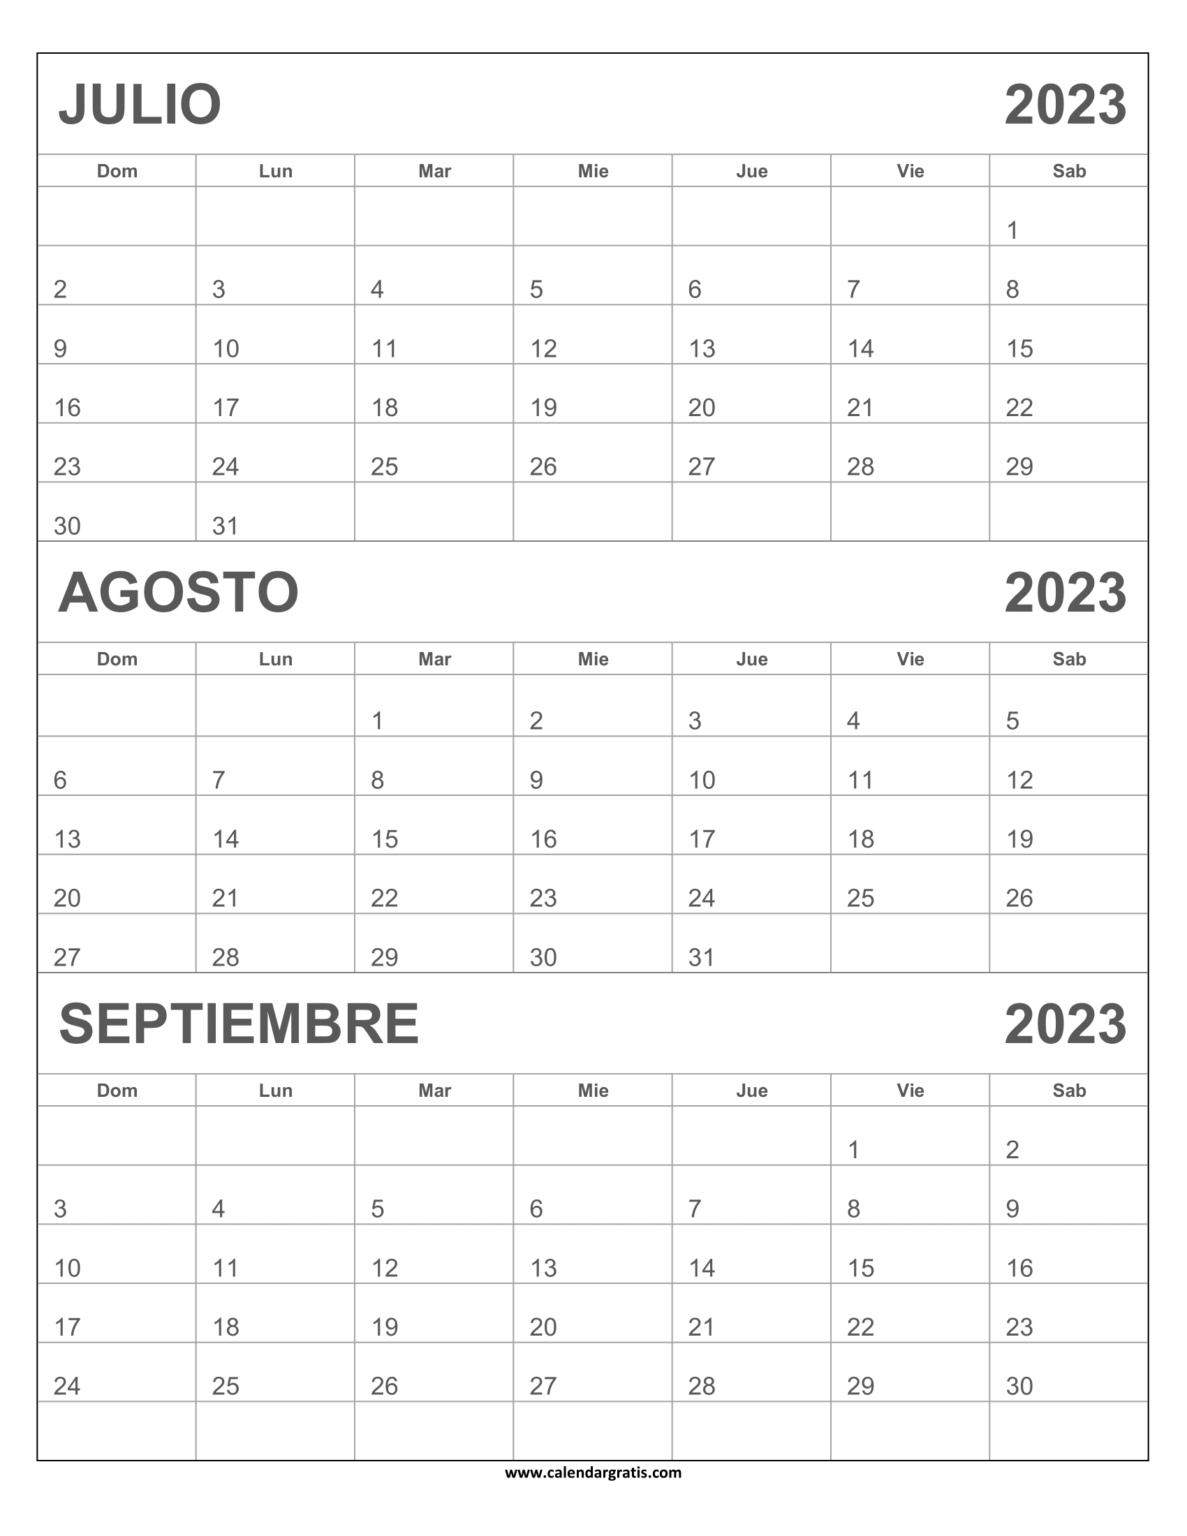 Calendario Julio Agosto Septiembre 2023 Para Imprimir